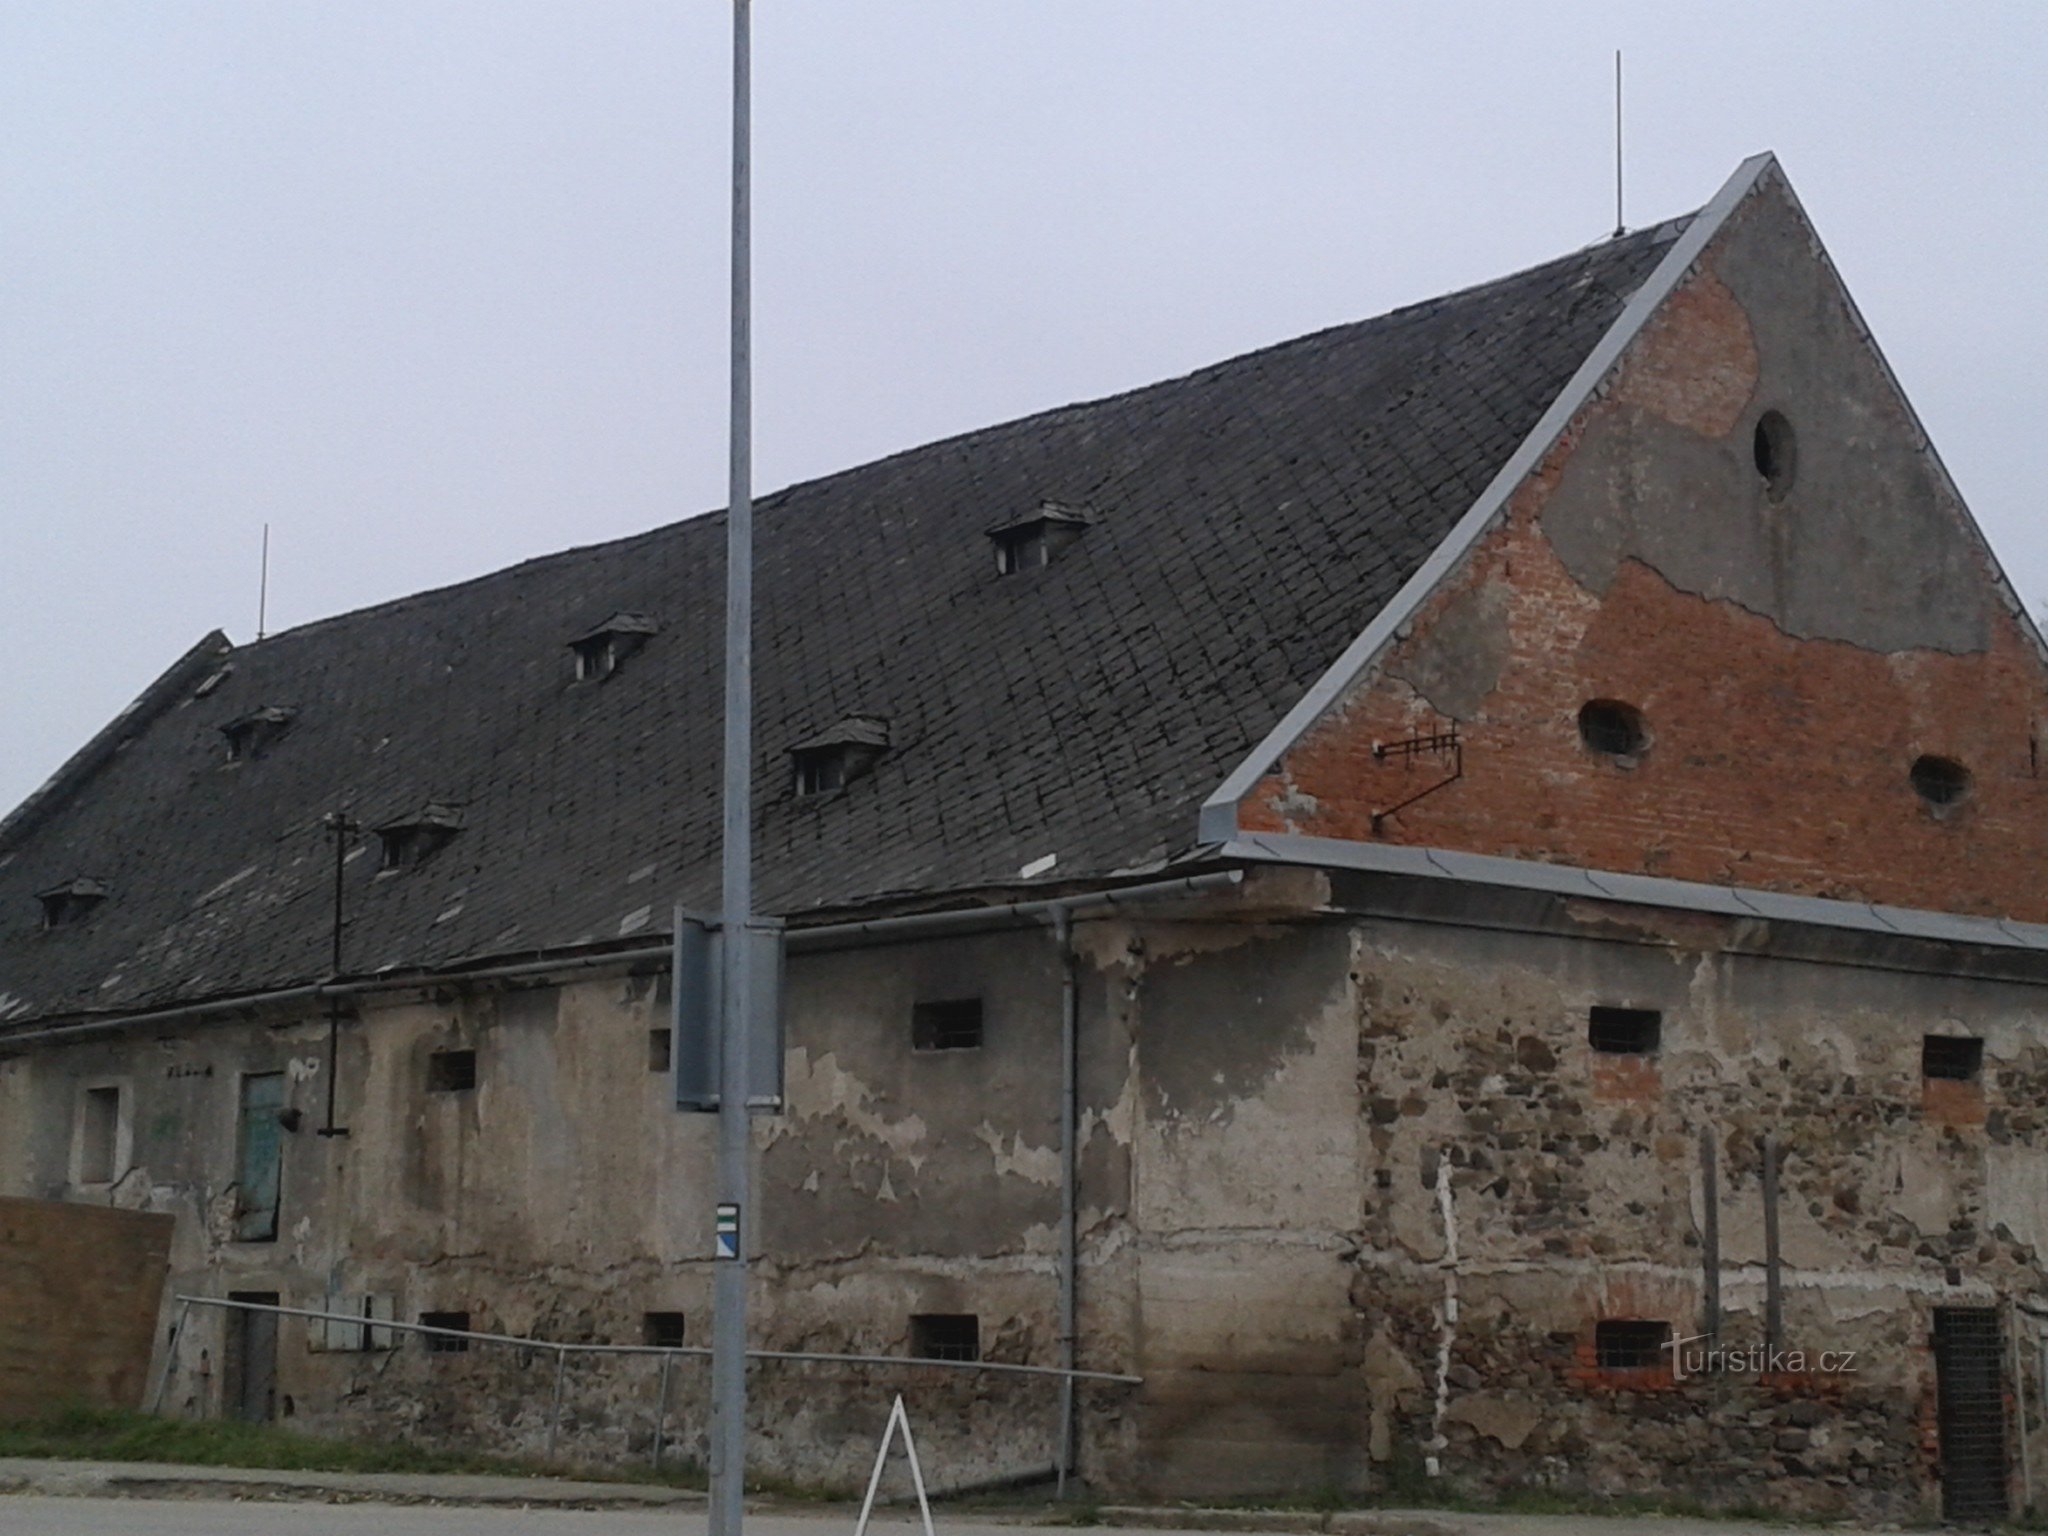 Zábřeh - granero barroco - monumento cultural inamovible protegido